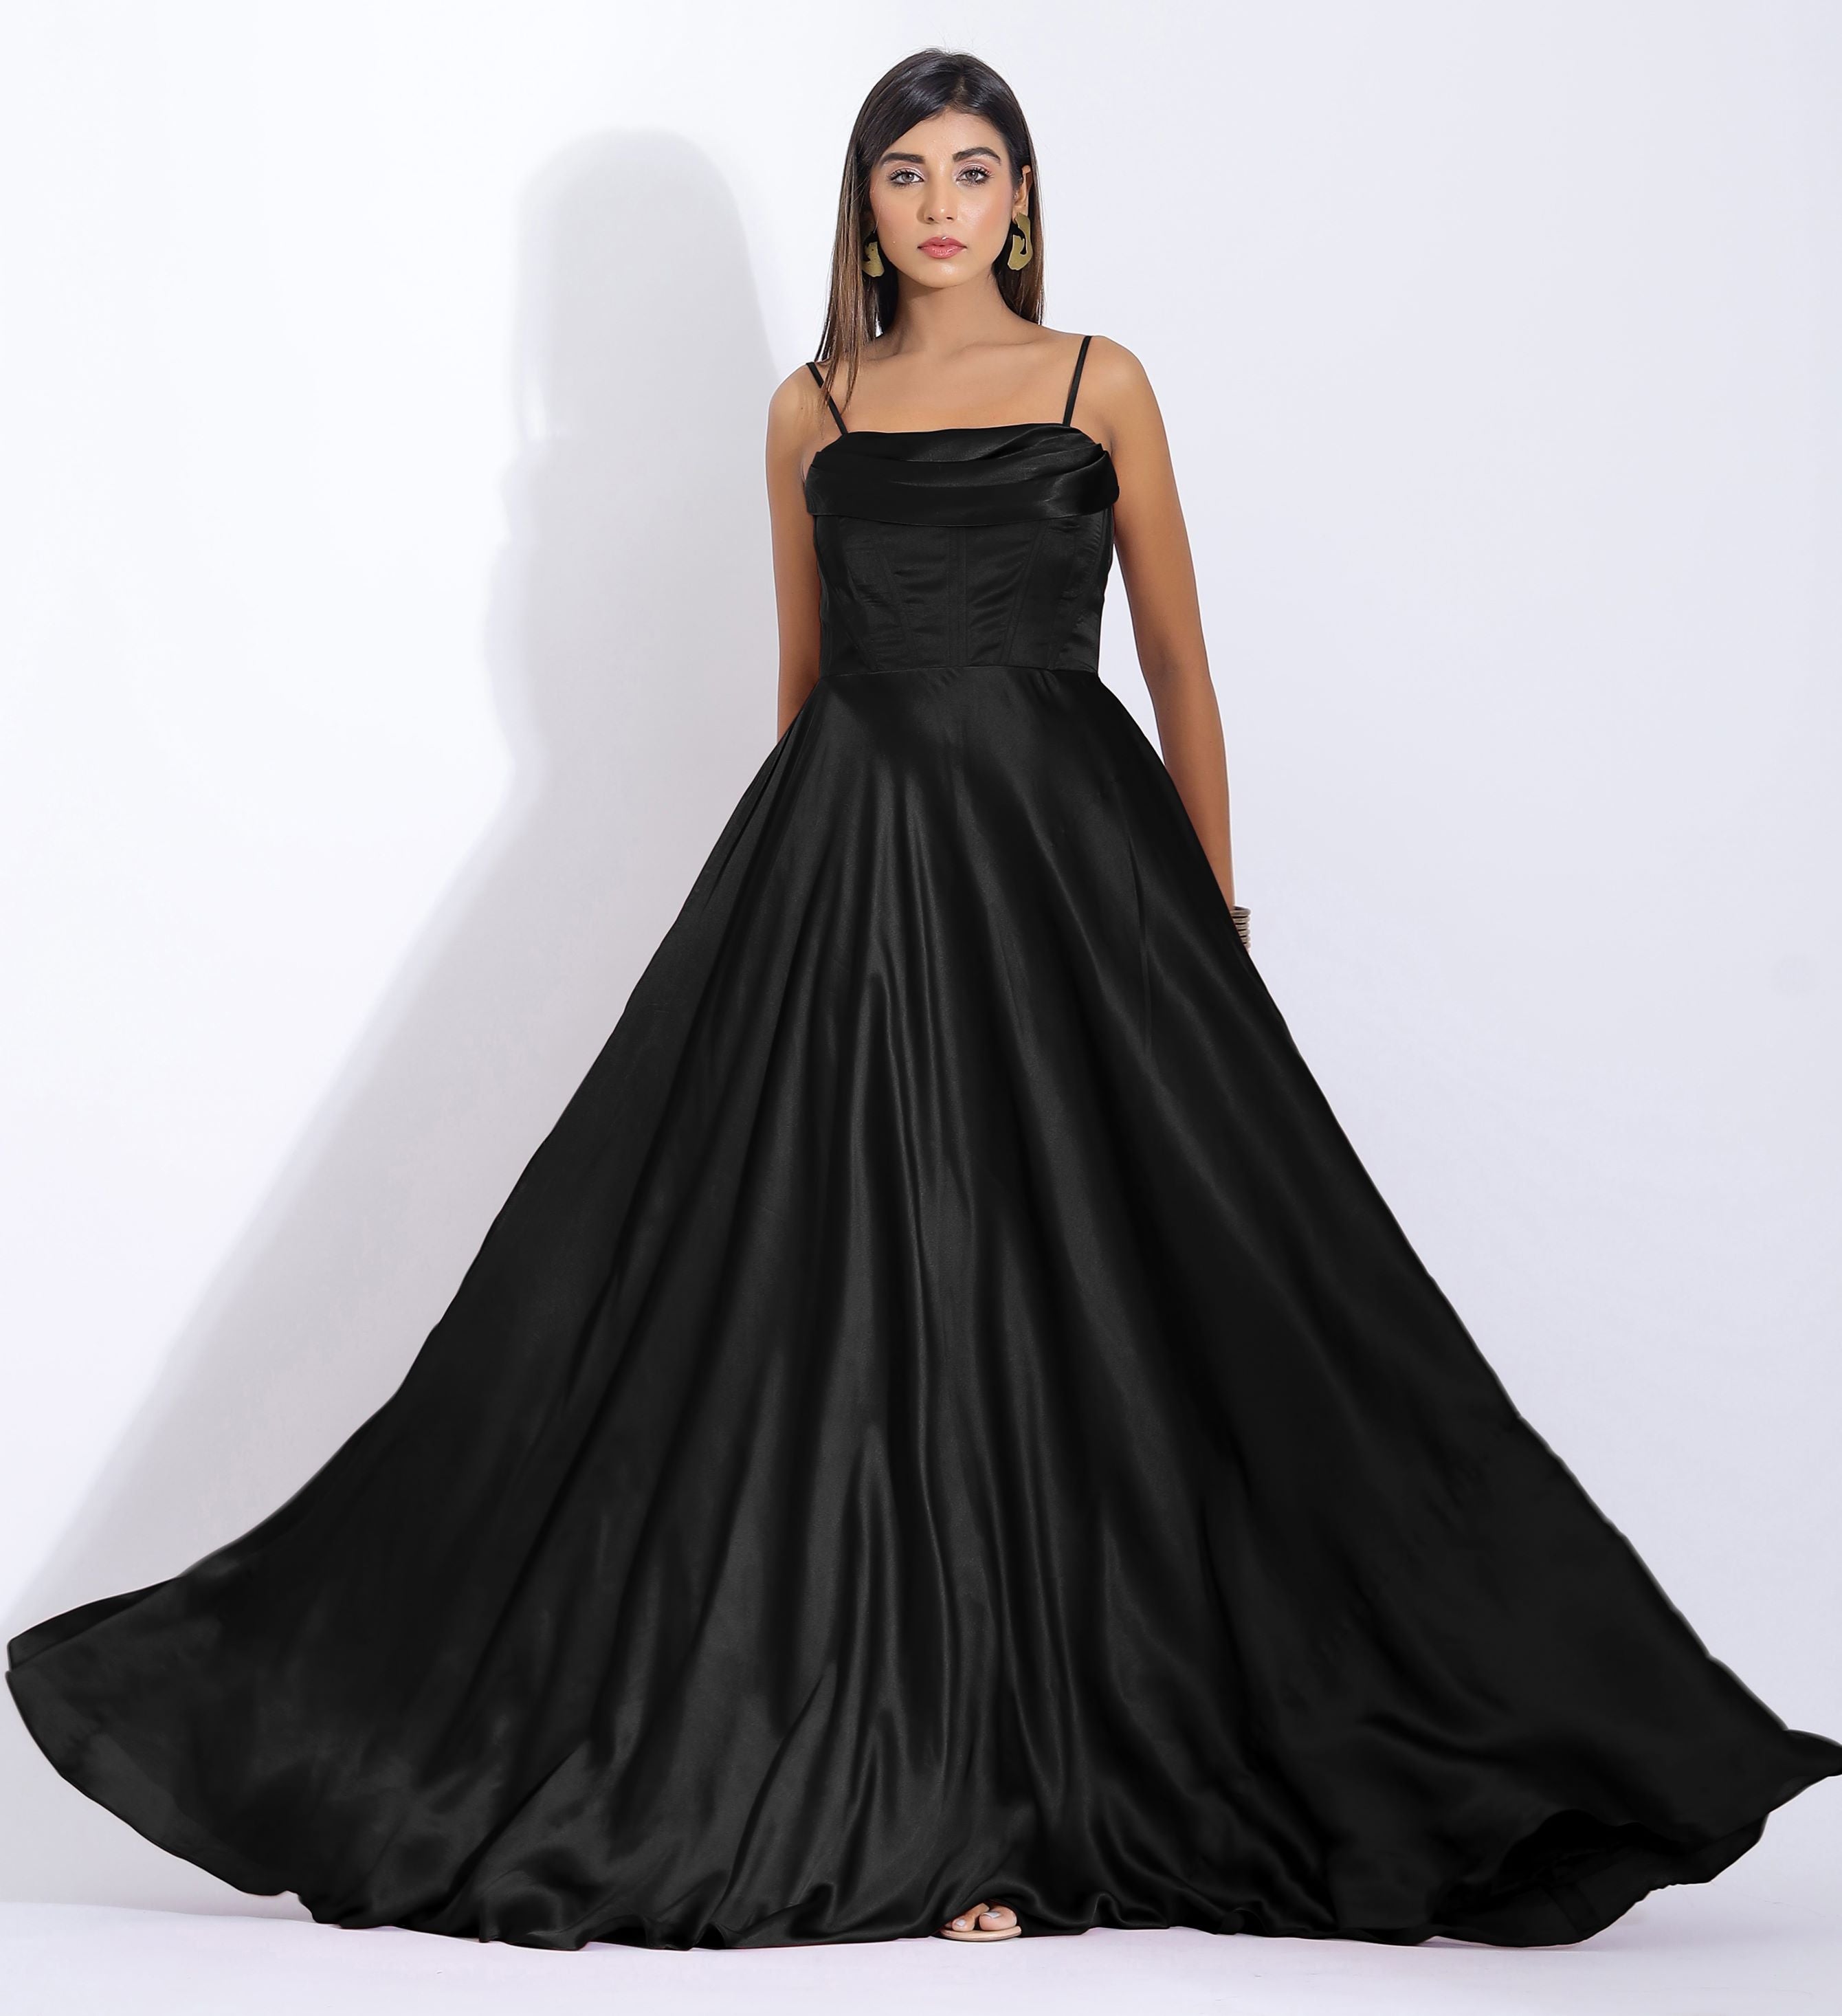 Black Corset Gown full